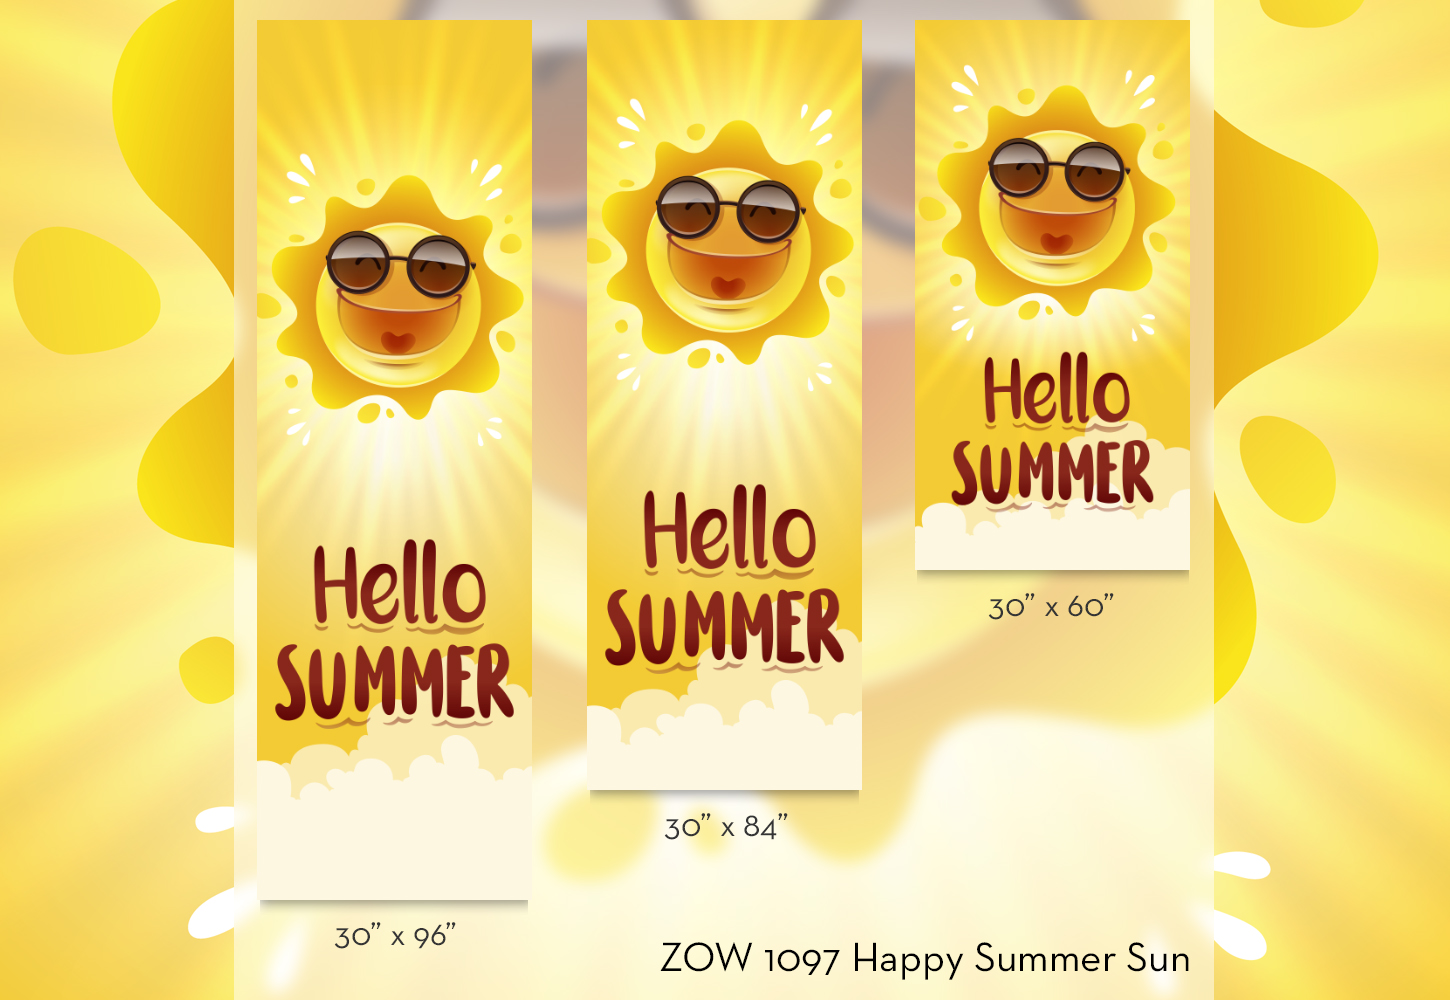 ZOW 1097 Happy Summer Sun